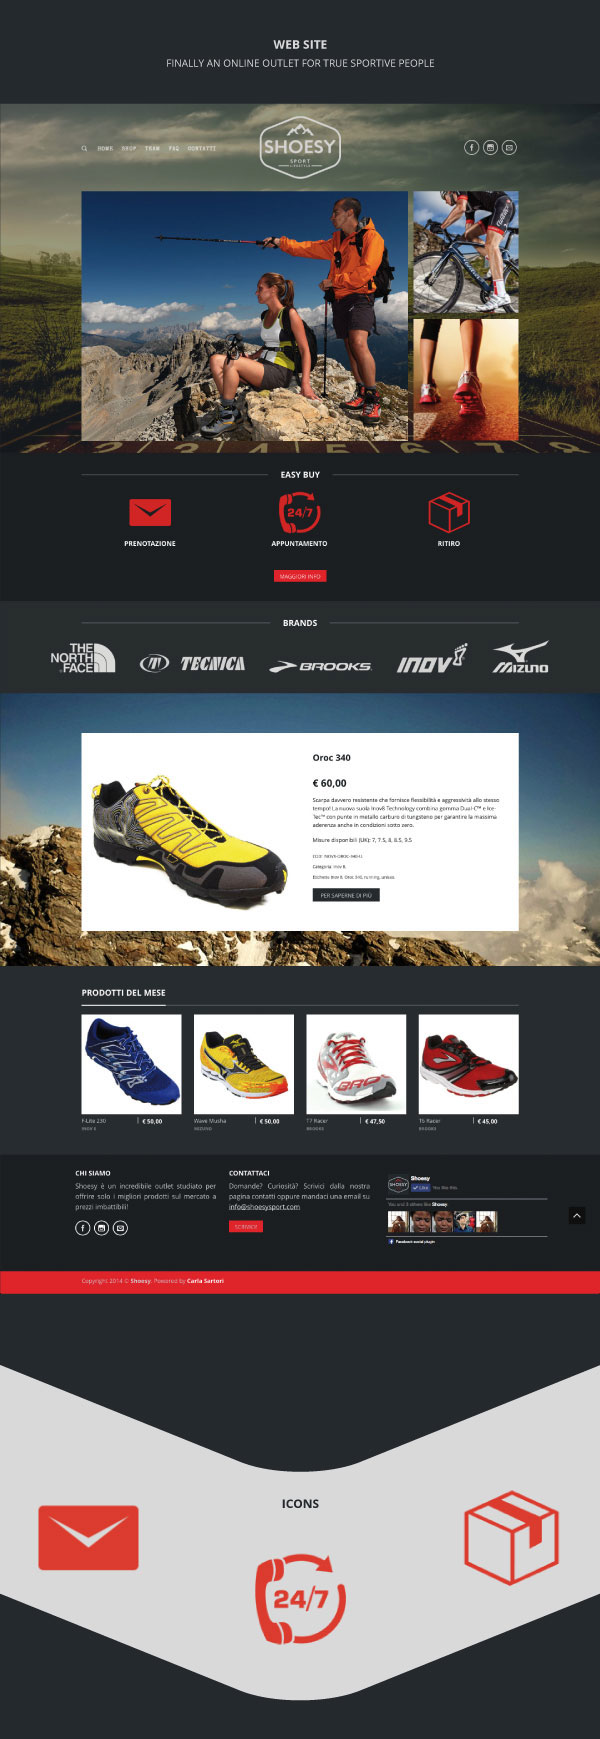 Shoesy sport shoes carla Sartori Web logo mountains running